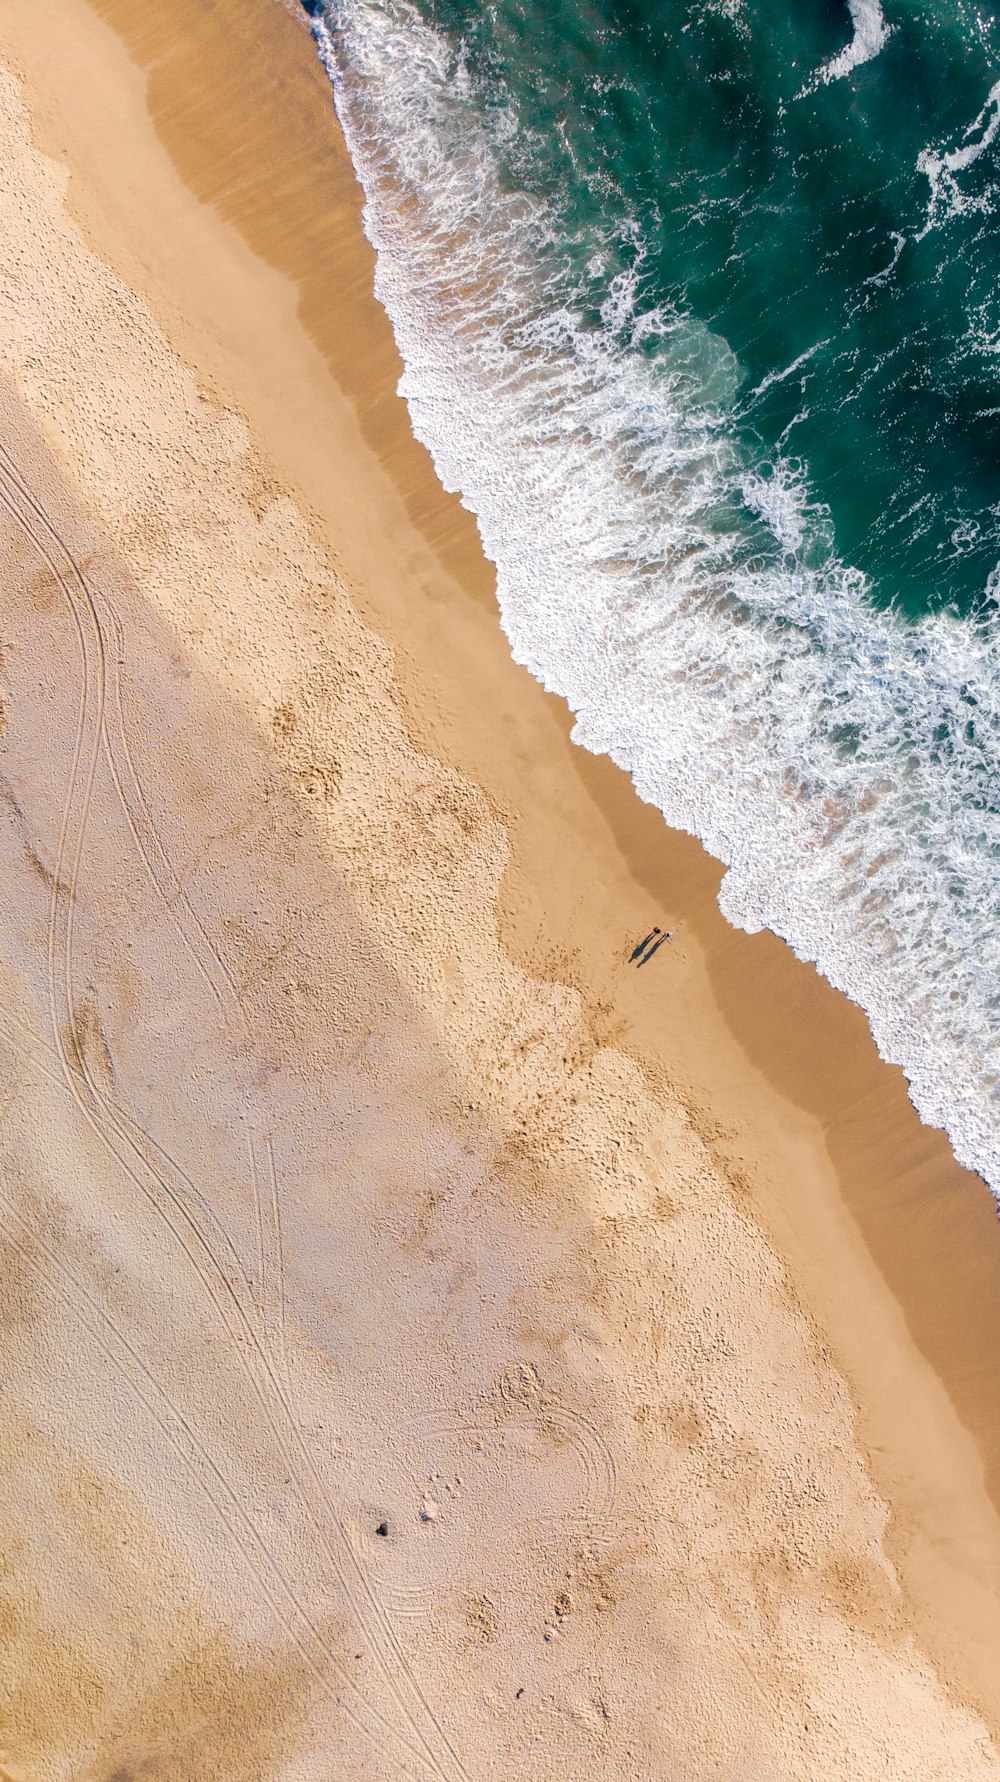 brown sand beach during daytime